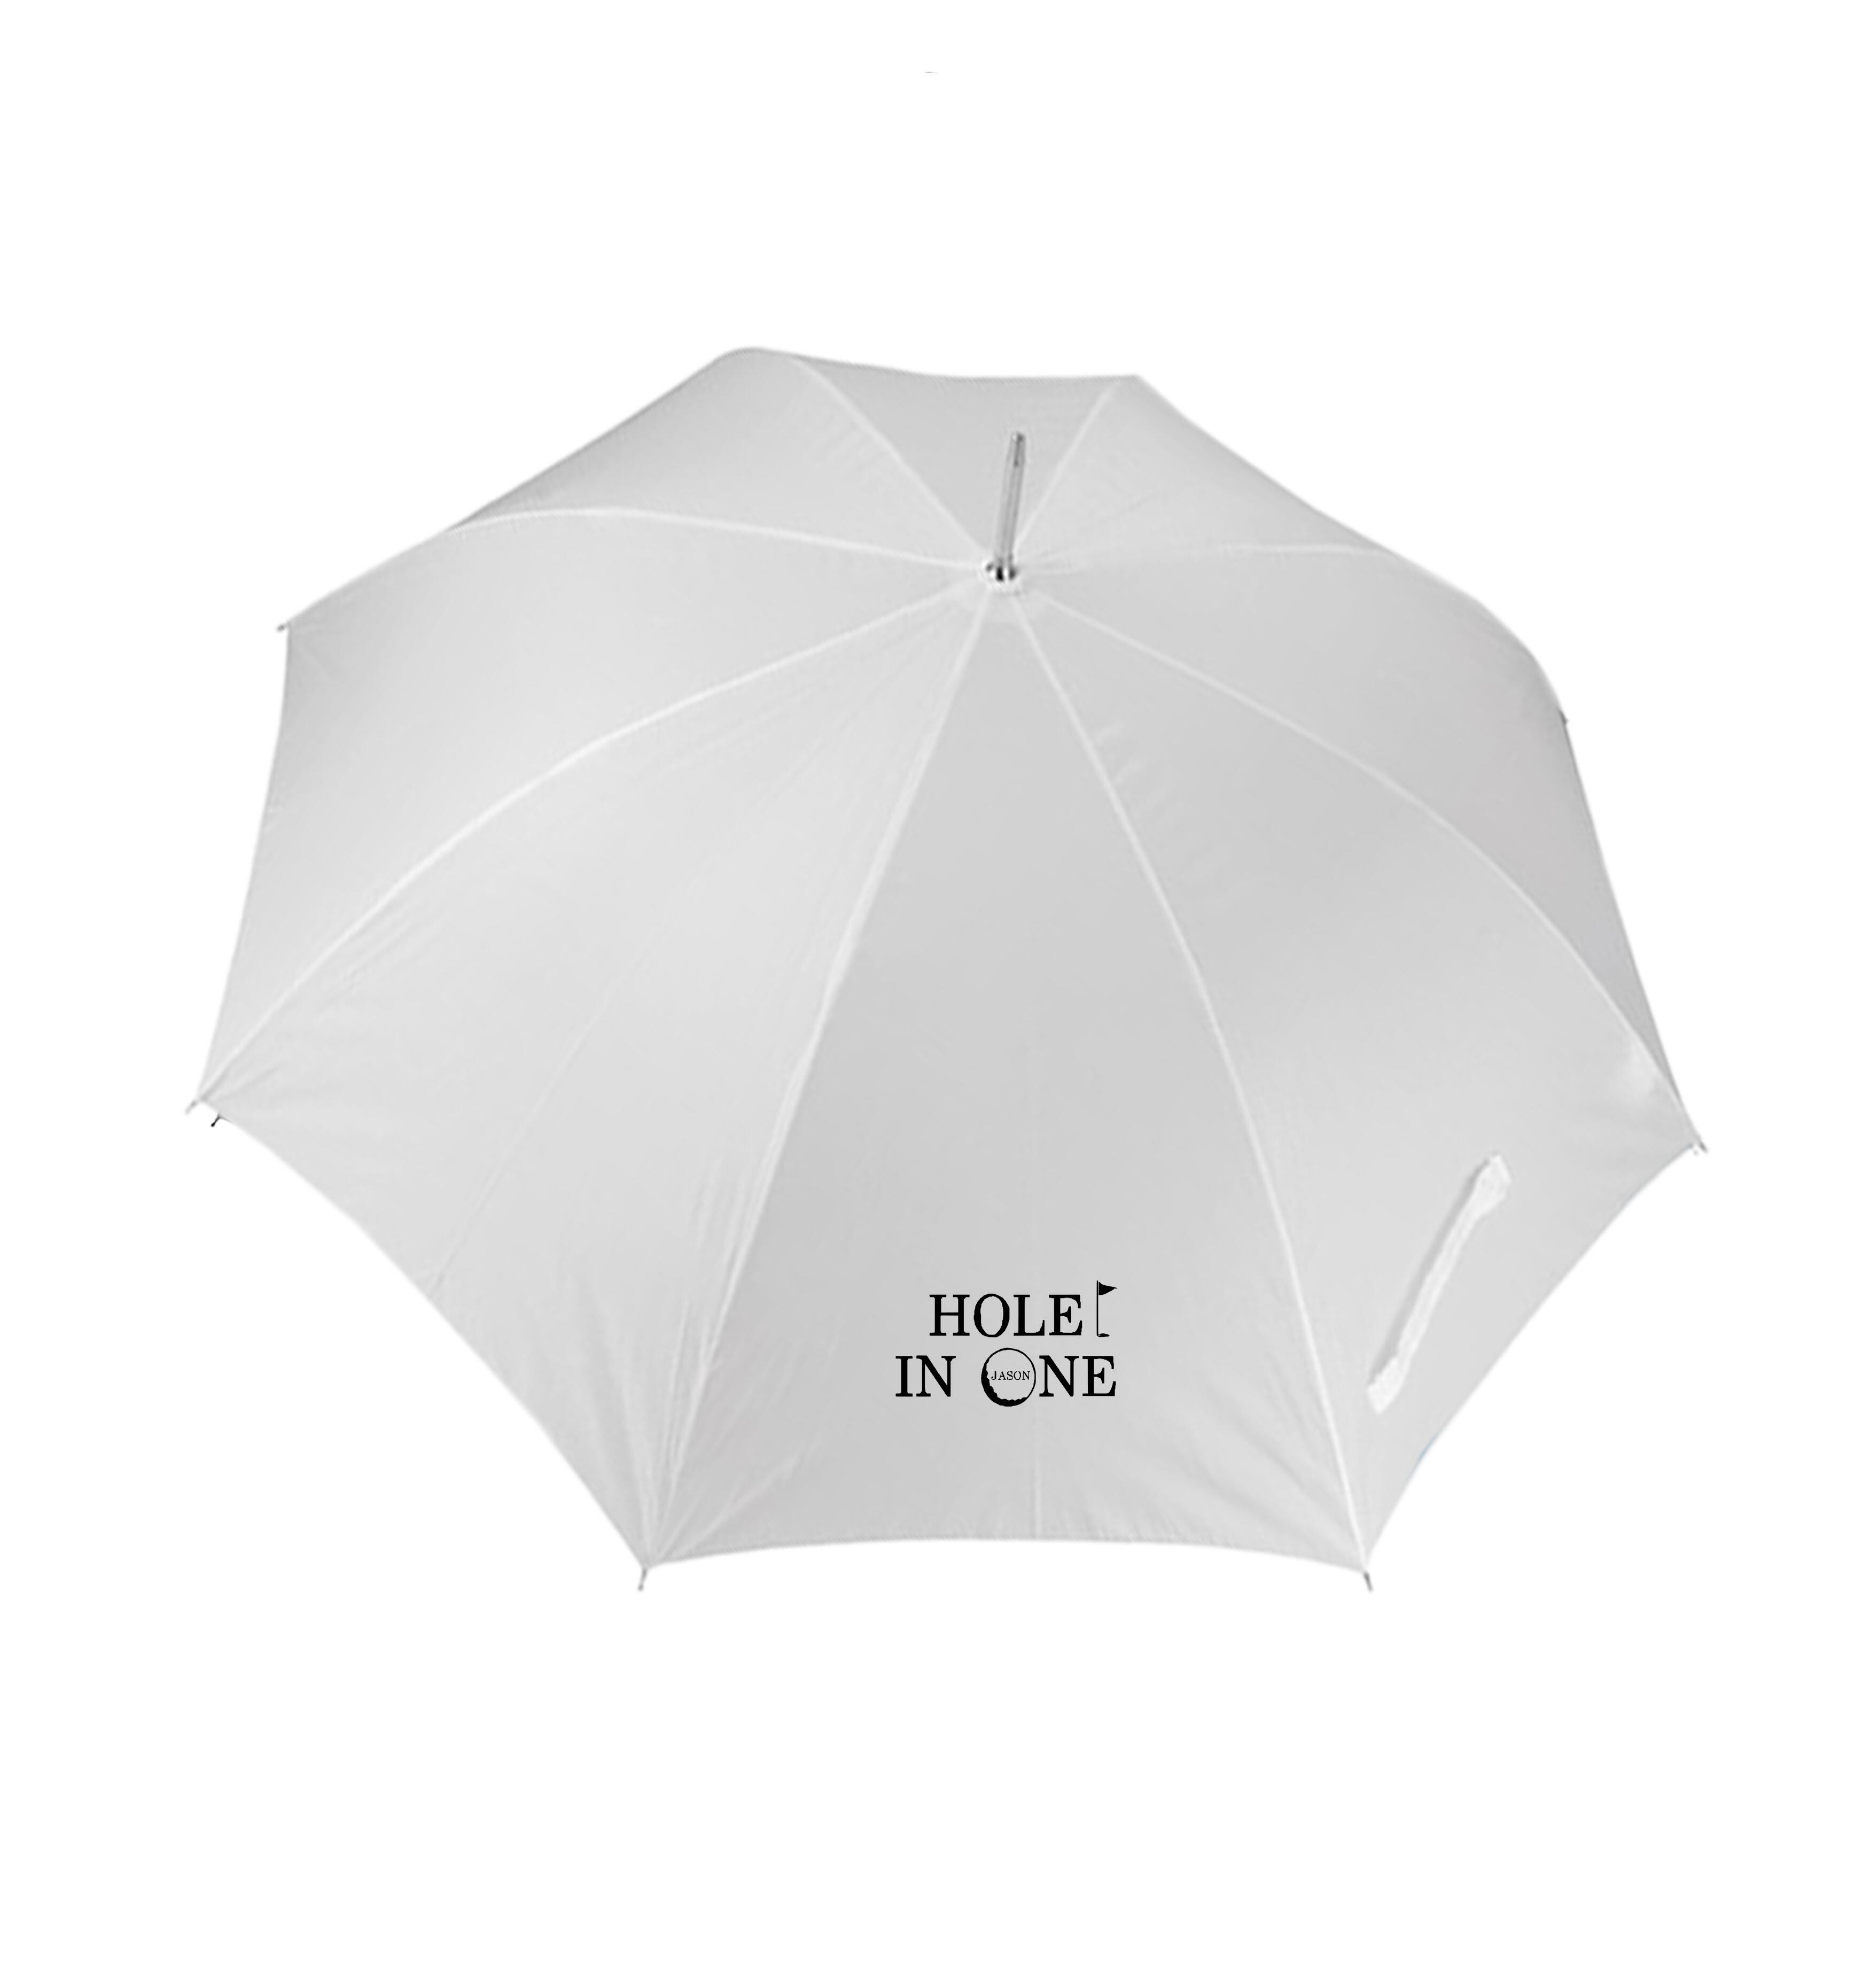 Hole in 1 Design Large Golf Umbrella White